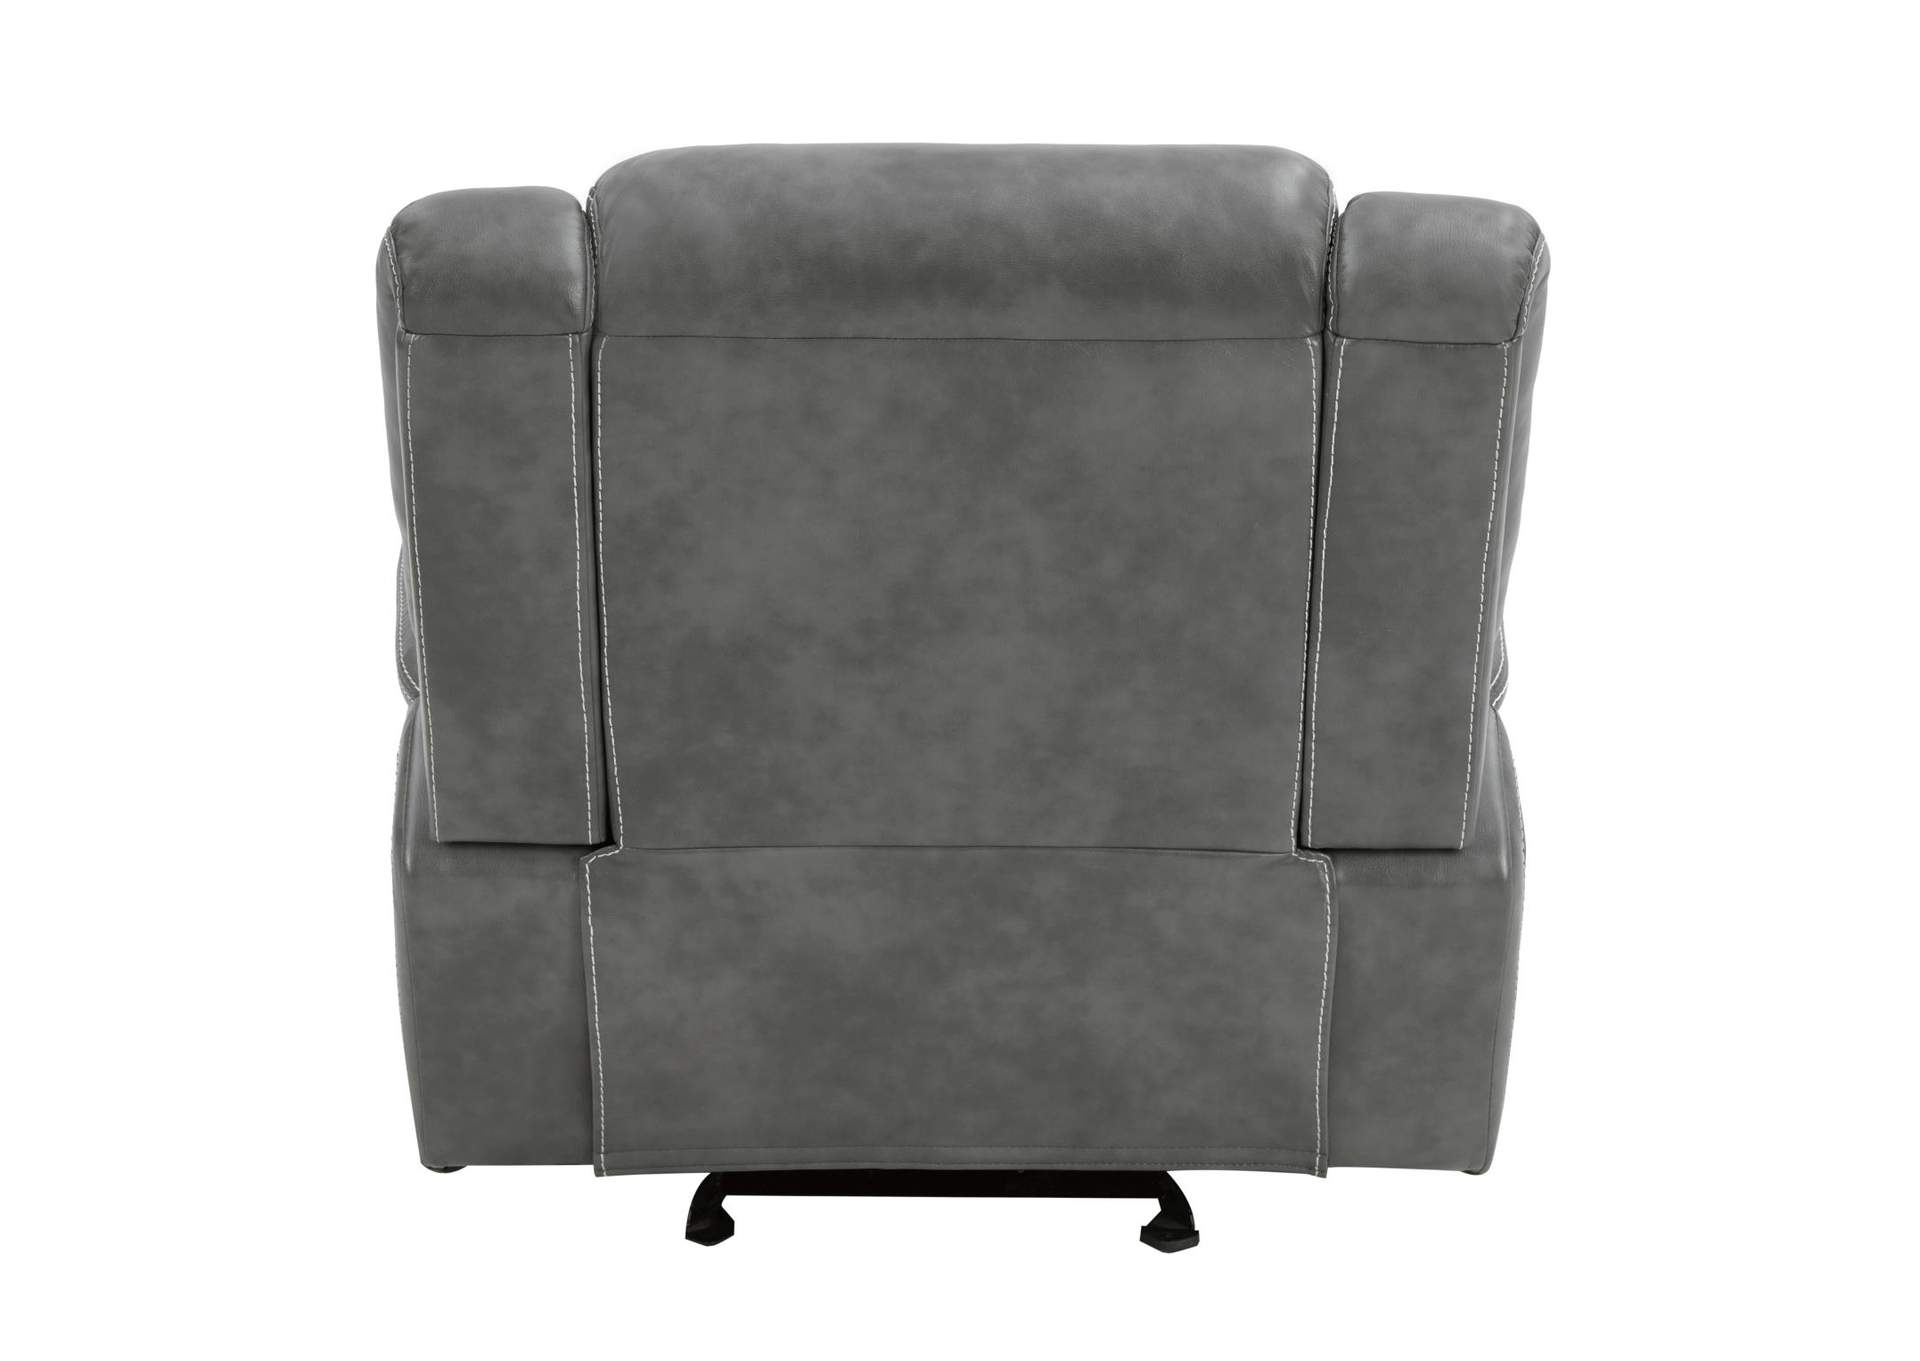 Conrad Upholstered Motion Glider Recliner Grey,Coaster Furniture